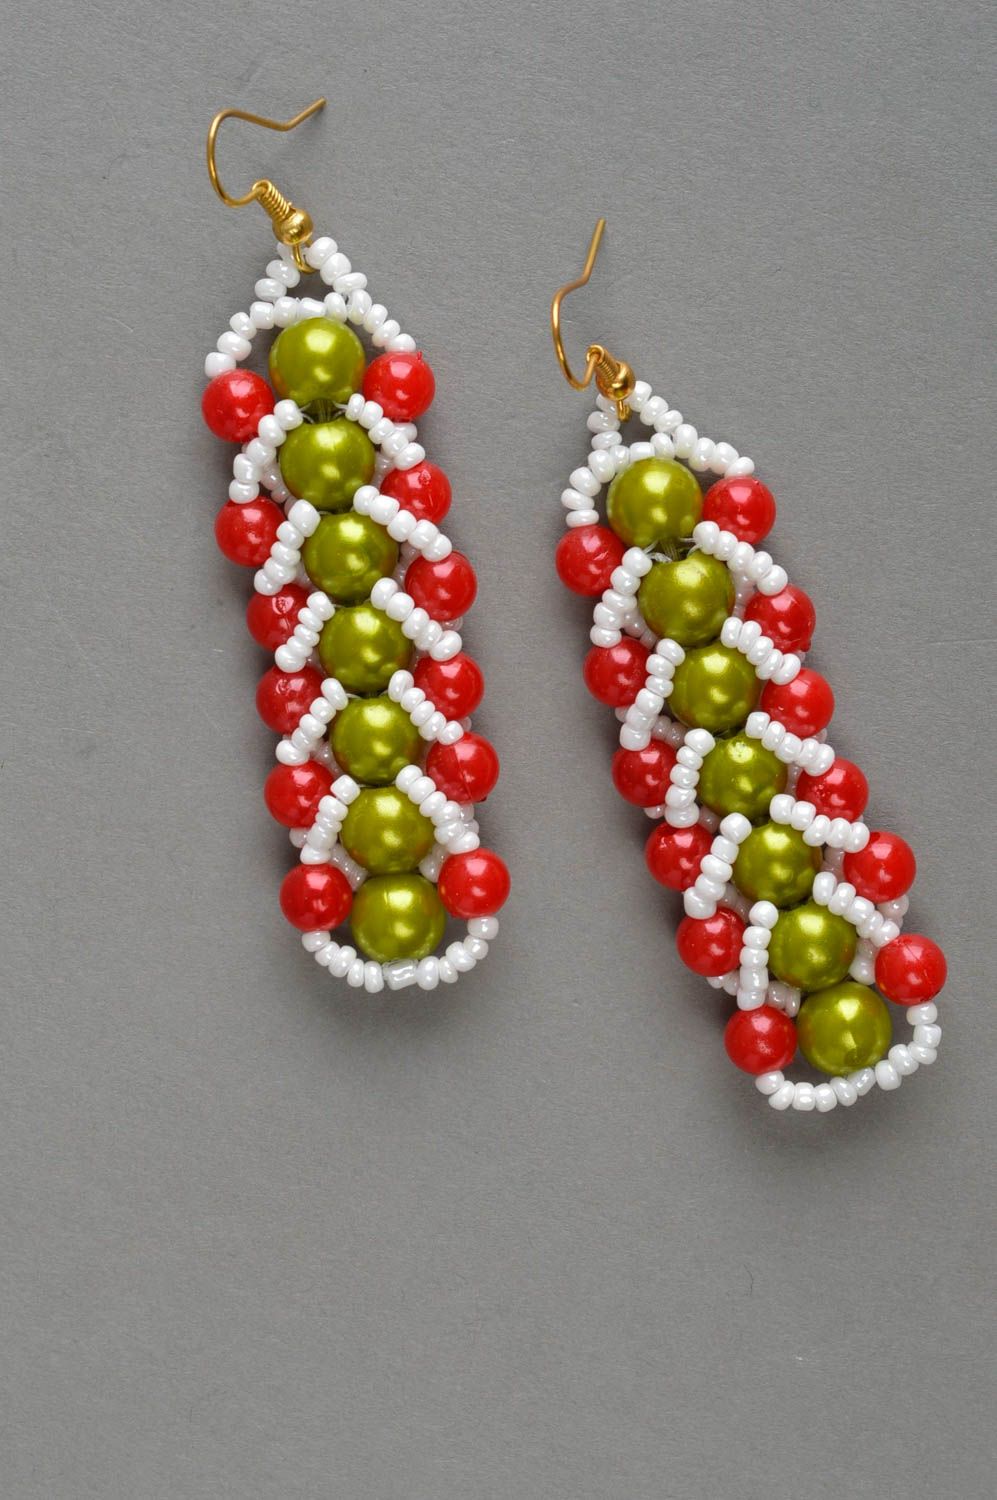 Stylish handmade long beaded earrings designer jewelry bead weaving ideas photo 2